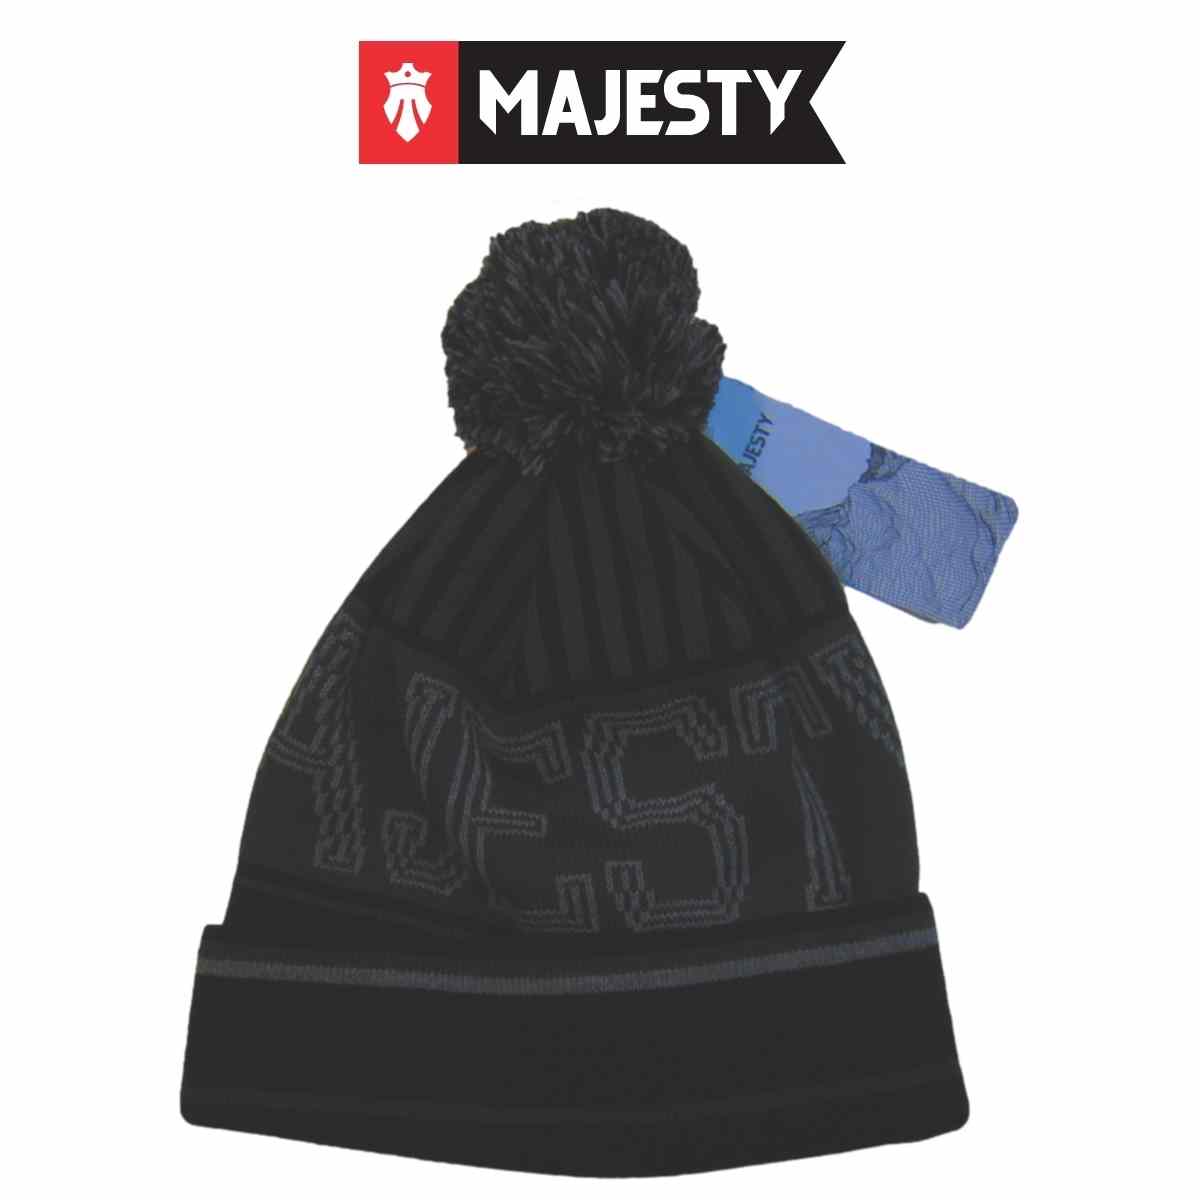 Majestyskis Sibi Beanie graphiteマジェスティ スキー エスアイビーアイビーニー2022/23国内正規品 2022/2023 FREE SKIボンボン付きニット帽